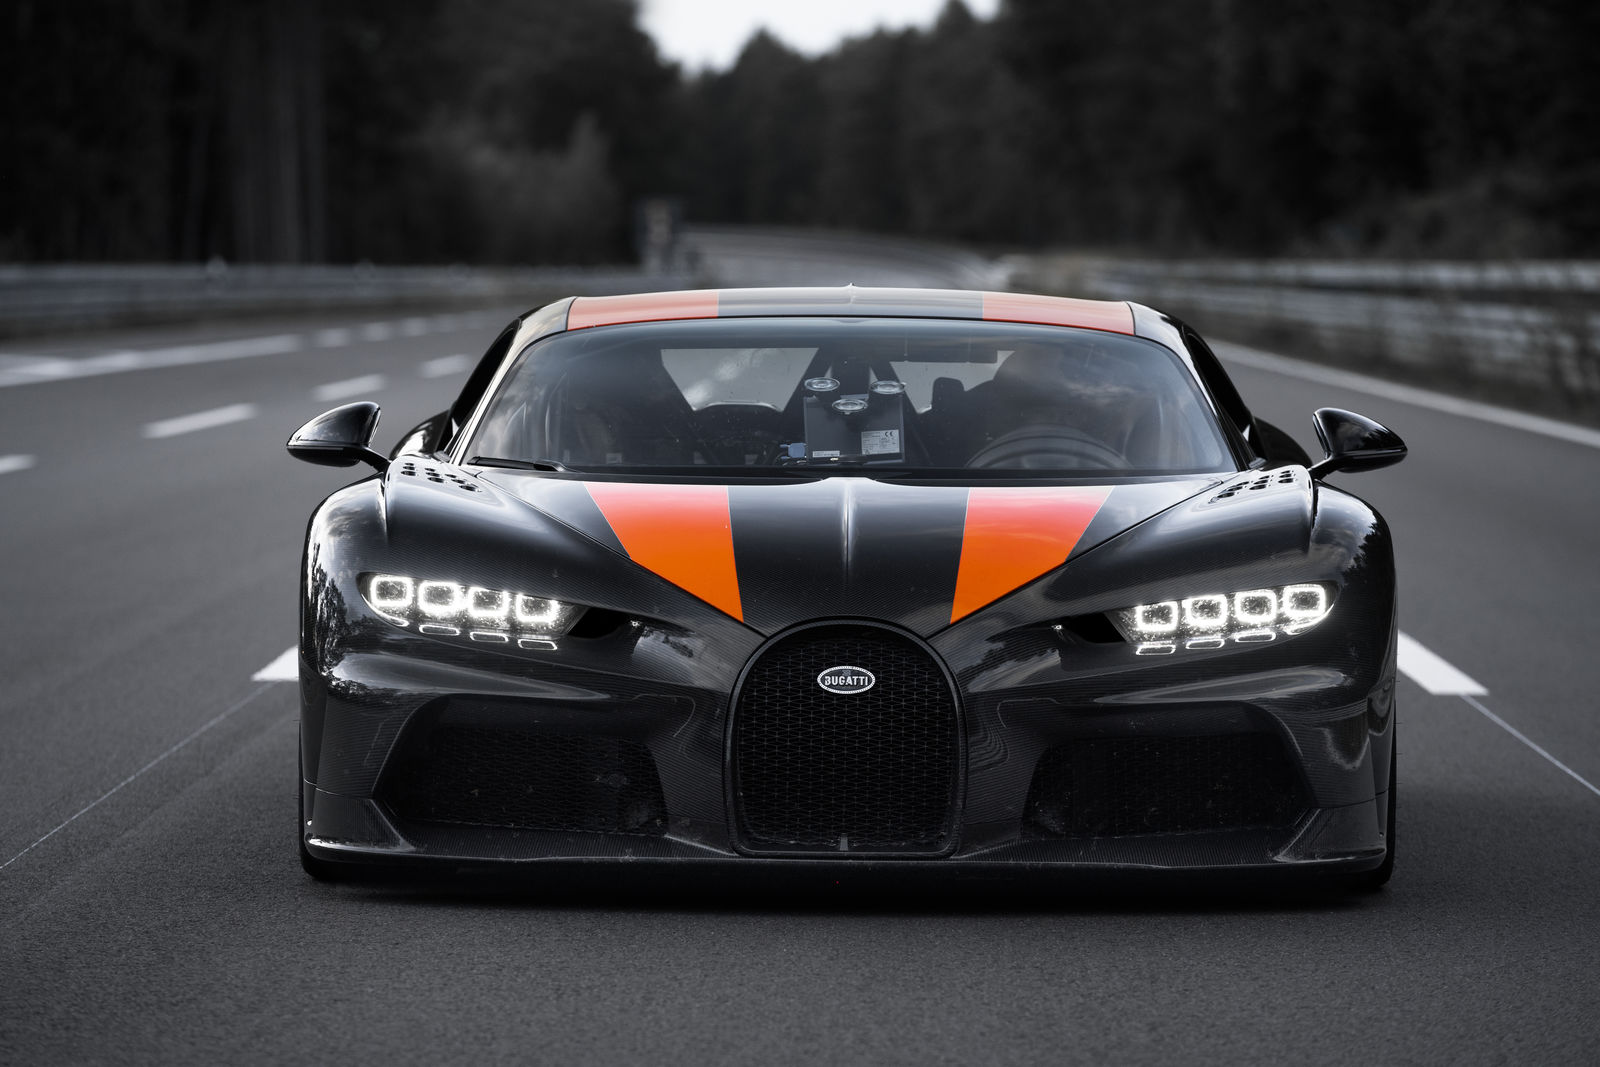 Bugatti Chiron 300 mph_2019 (2)